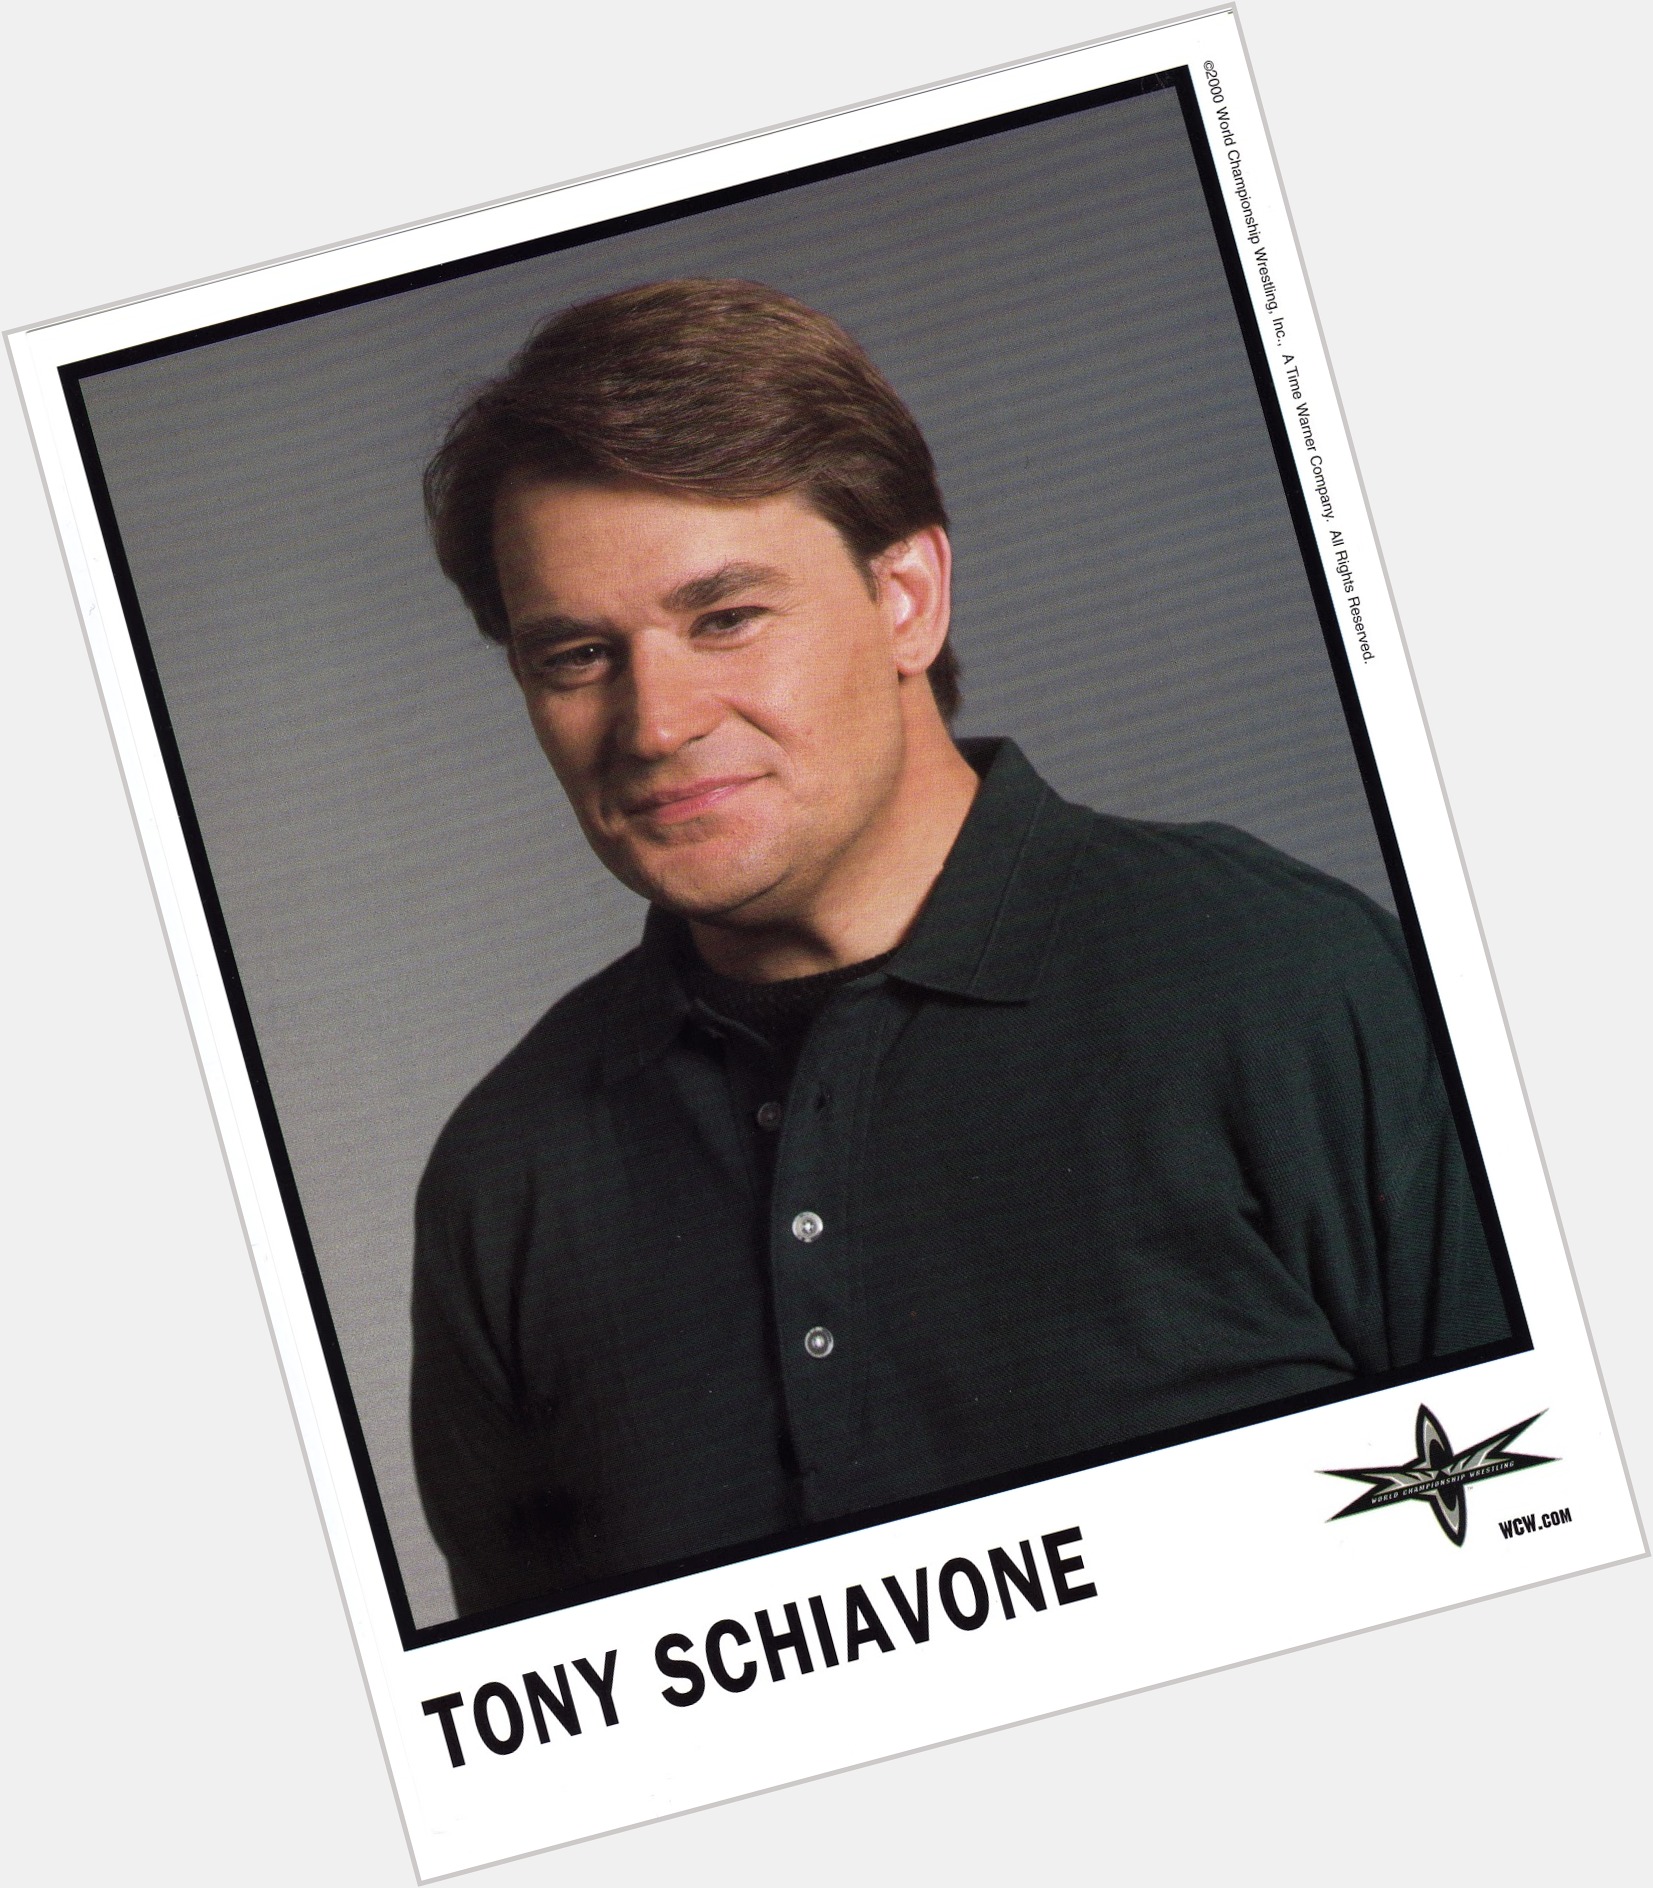 Tony Schiavone dating 2